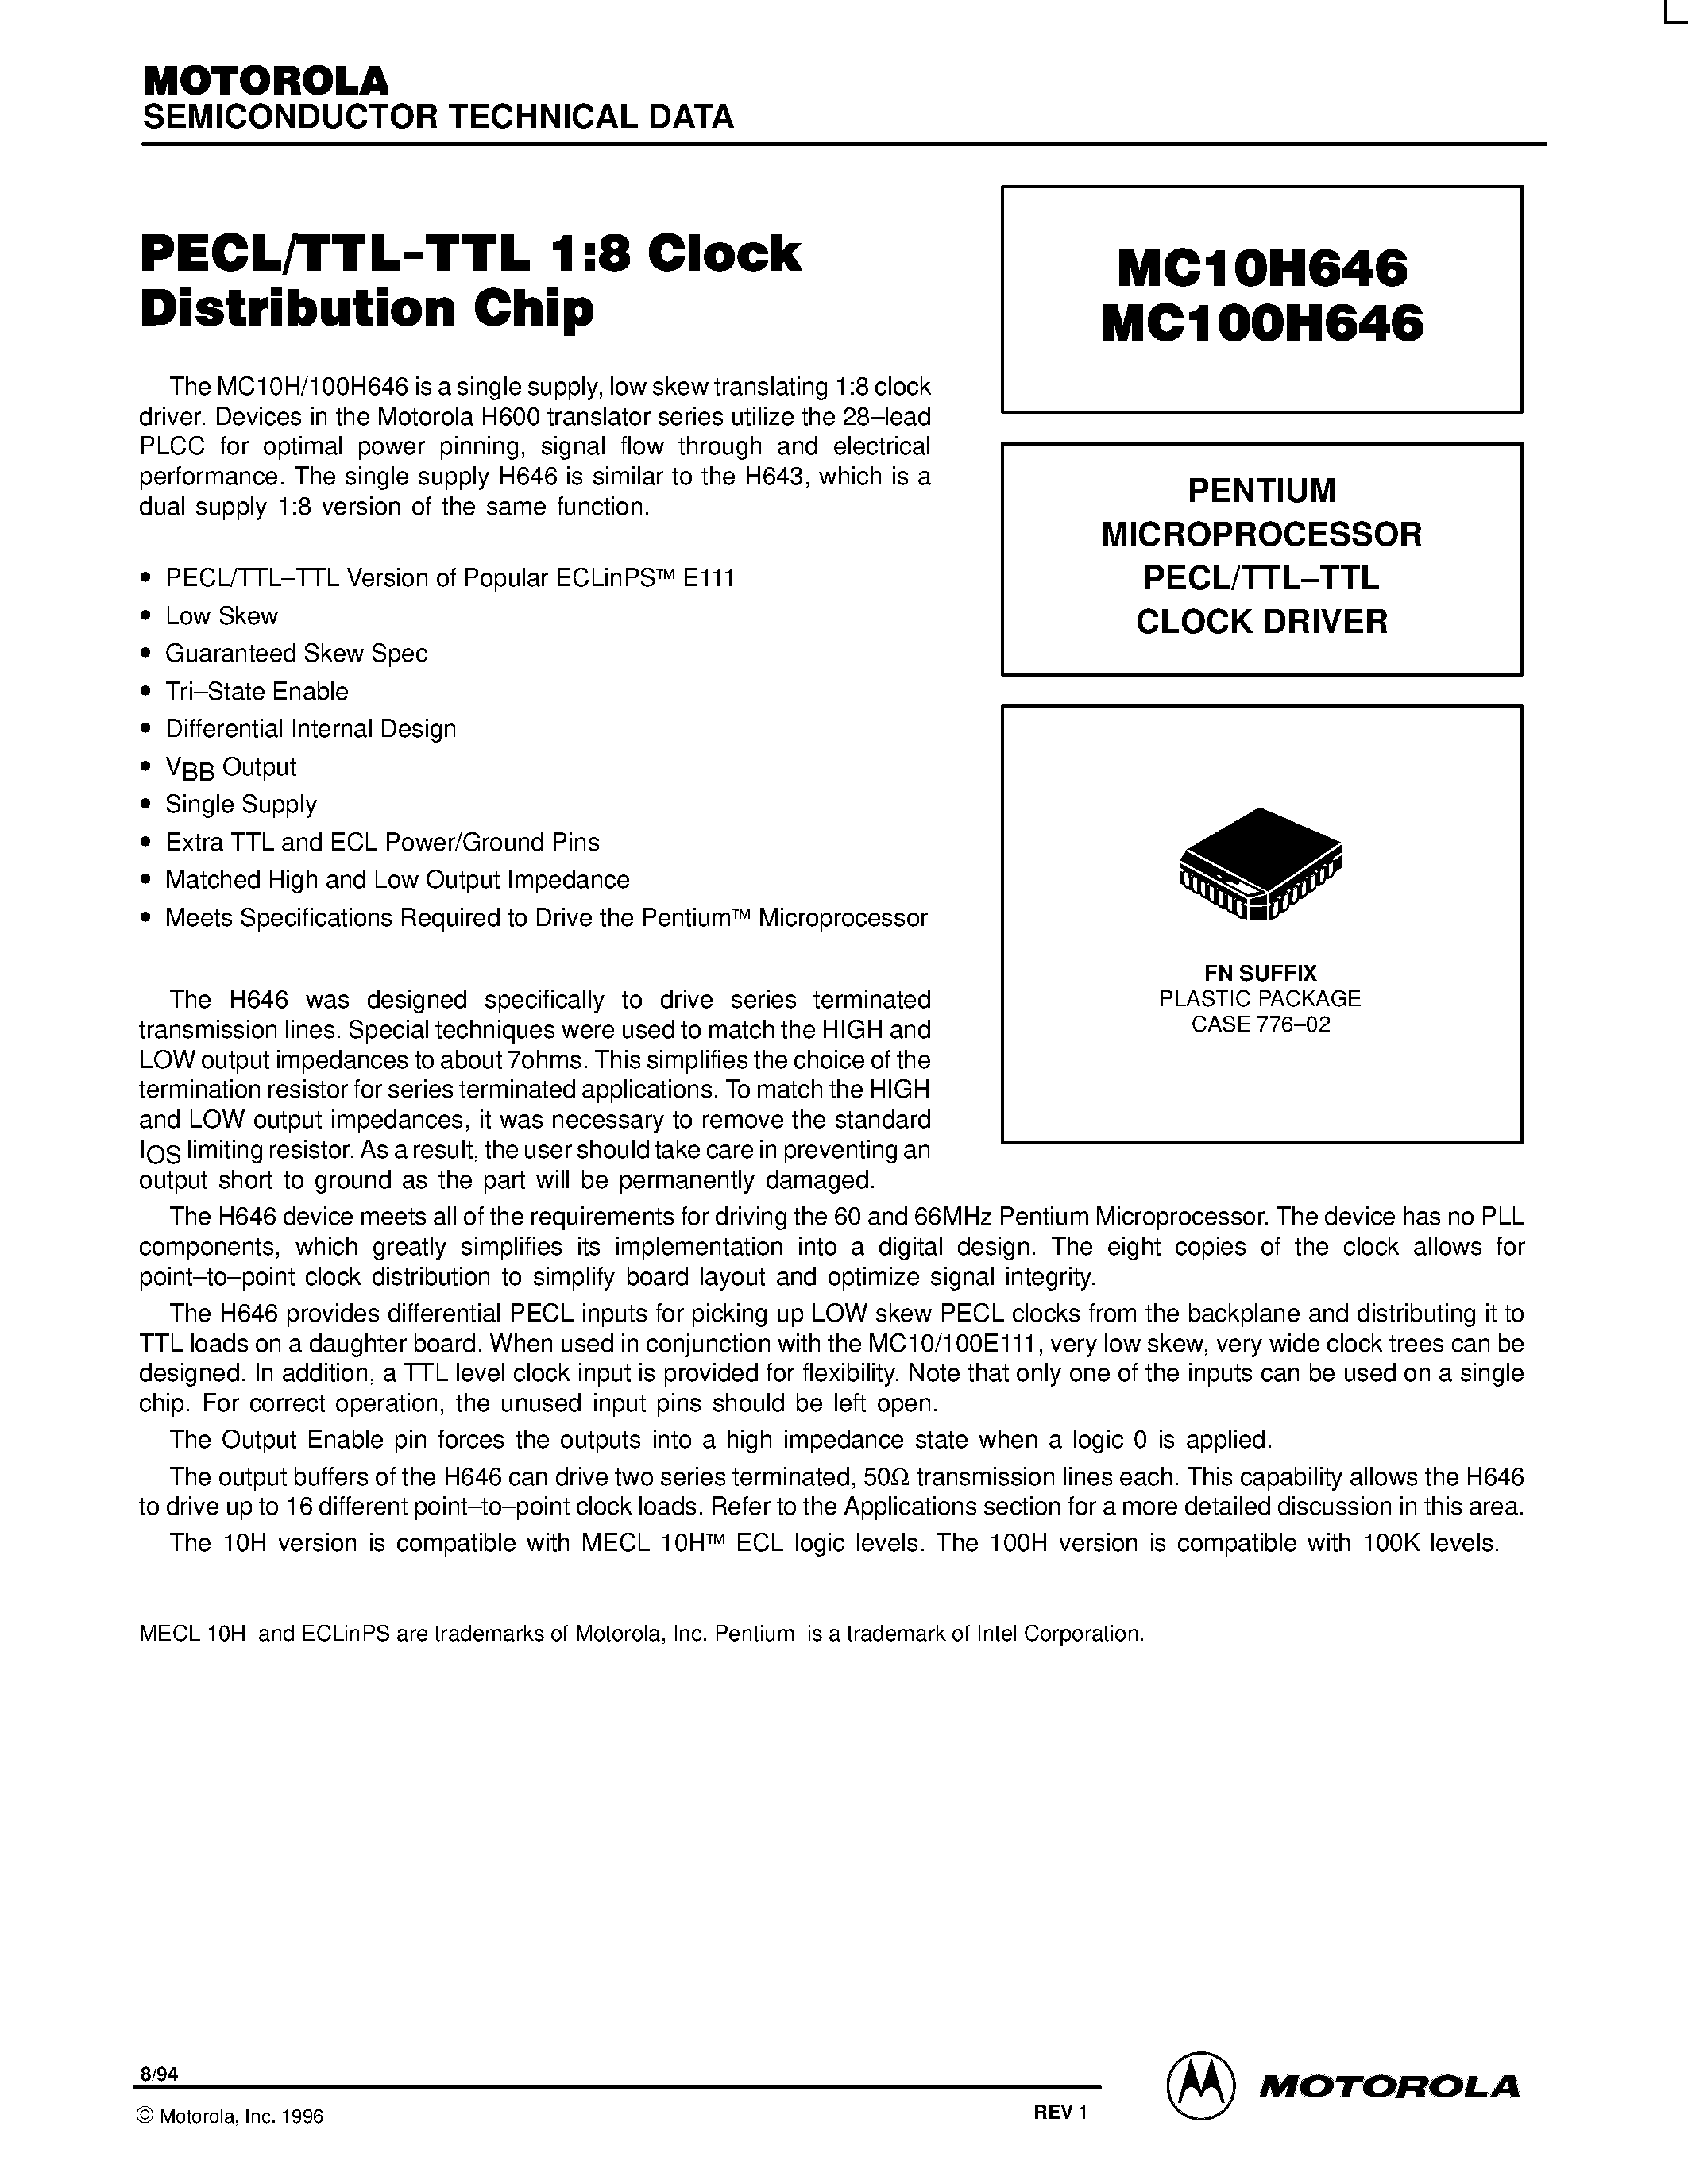 Даташит MC100H646FN-PENTIUM MICROPROCESSOR PECL/TTL-TTL CLOCK DRIVER страница 1